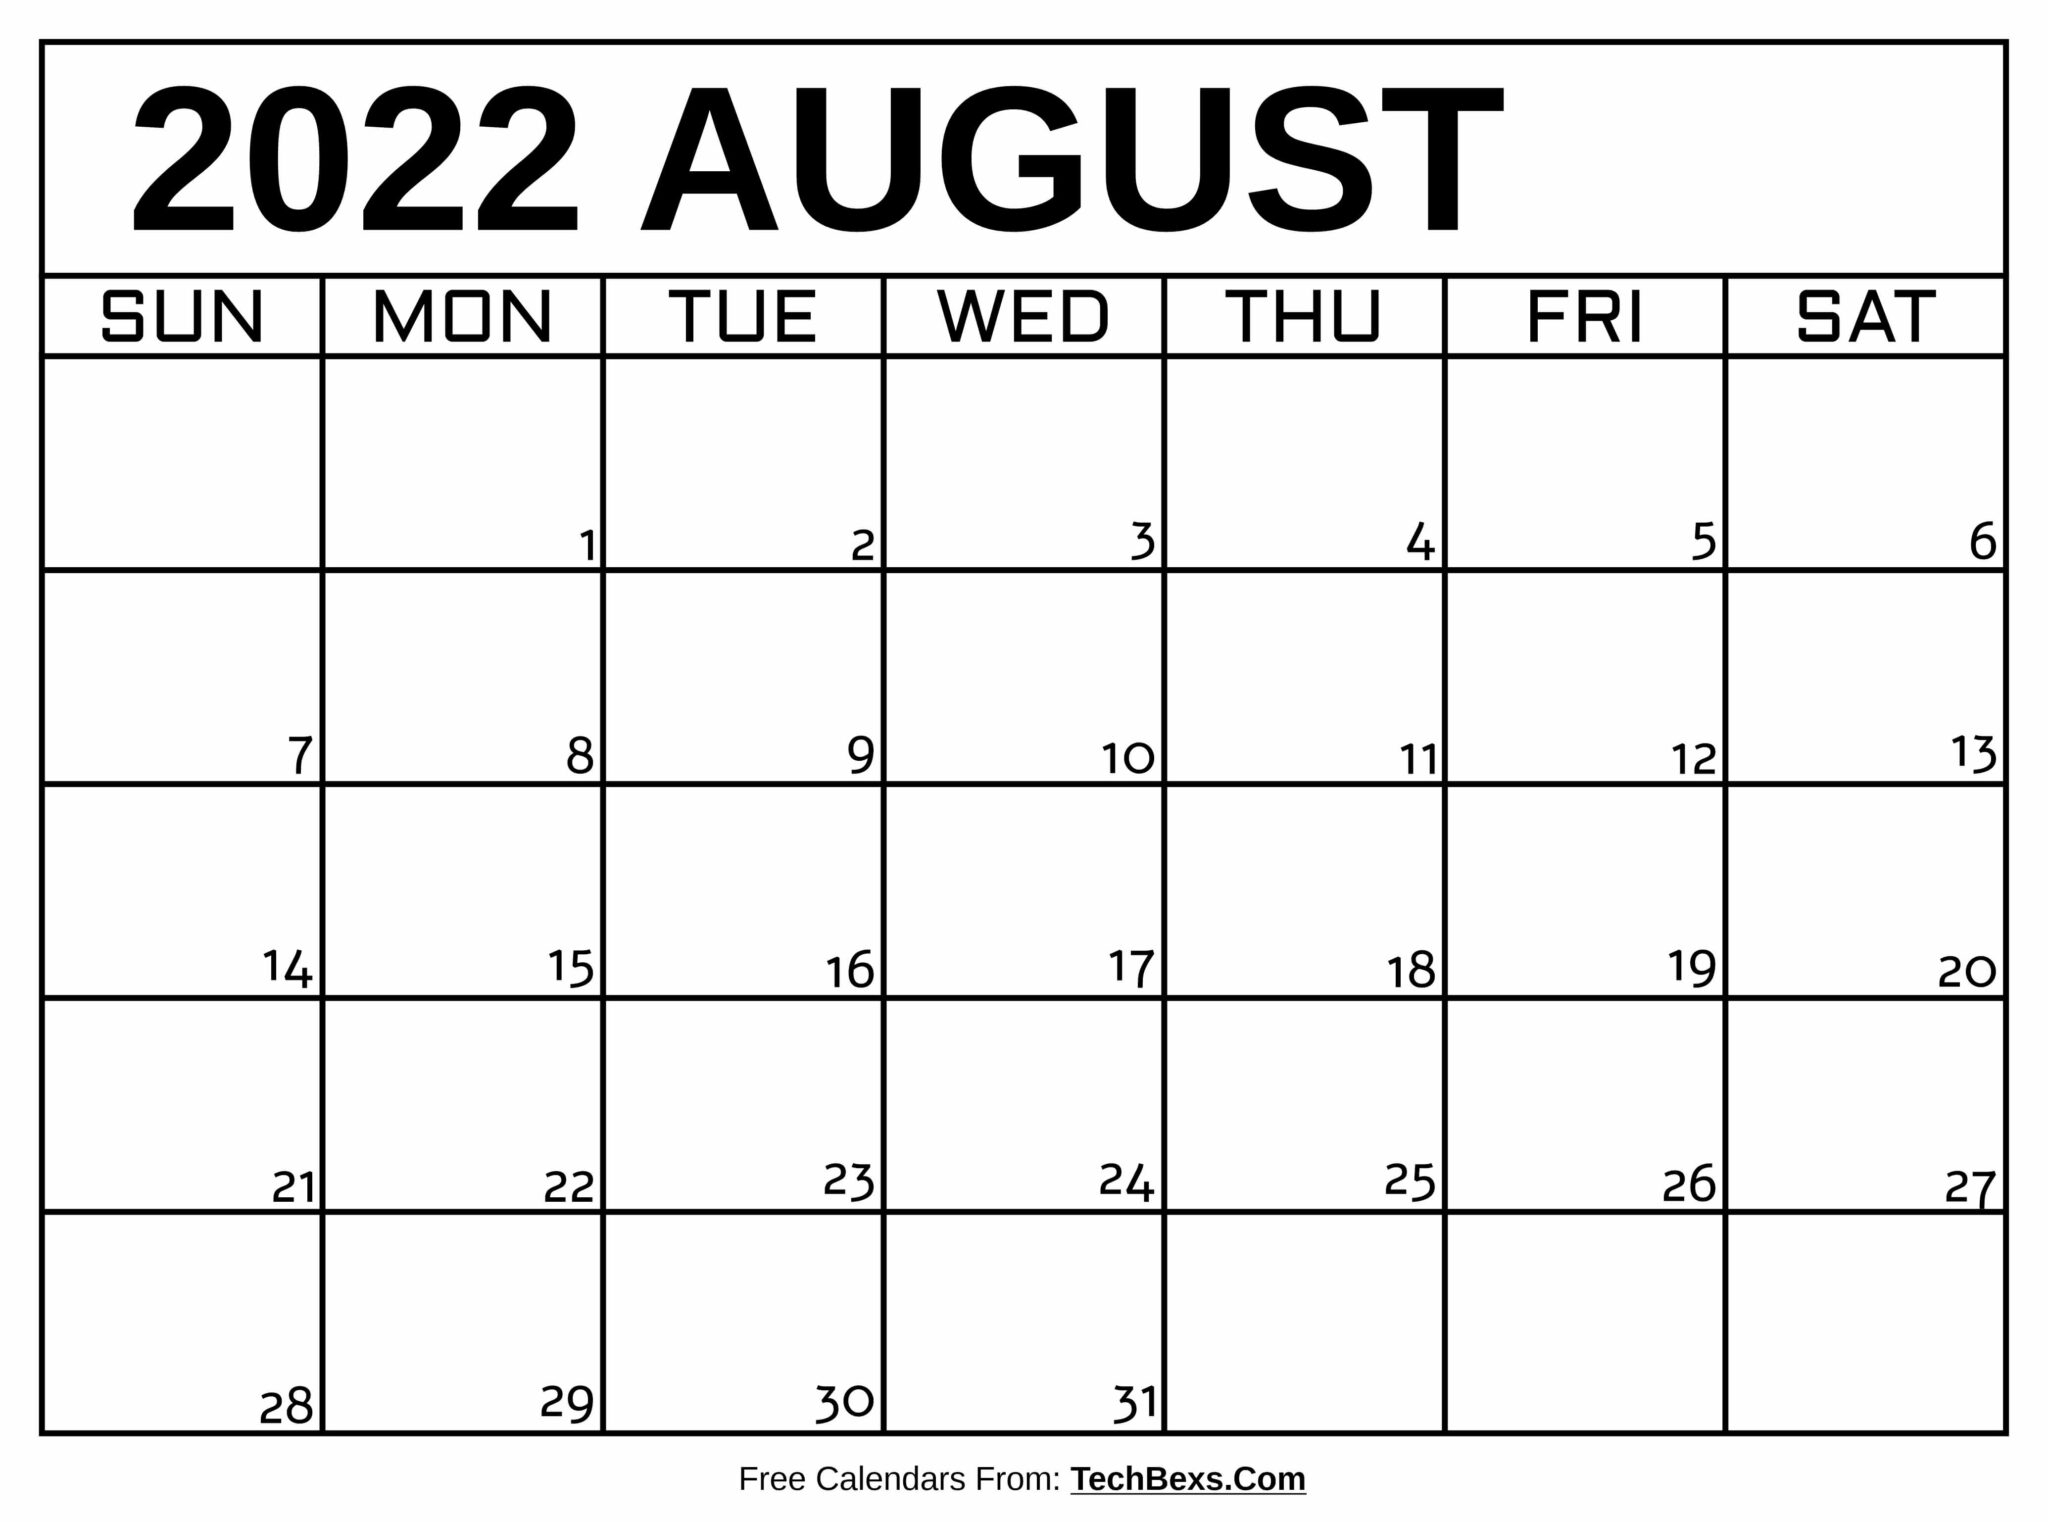 Monthly August 2022 Calendar Template - 2022 Calendars For